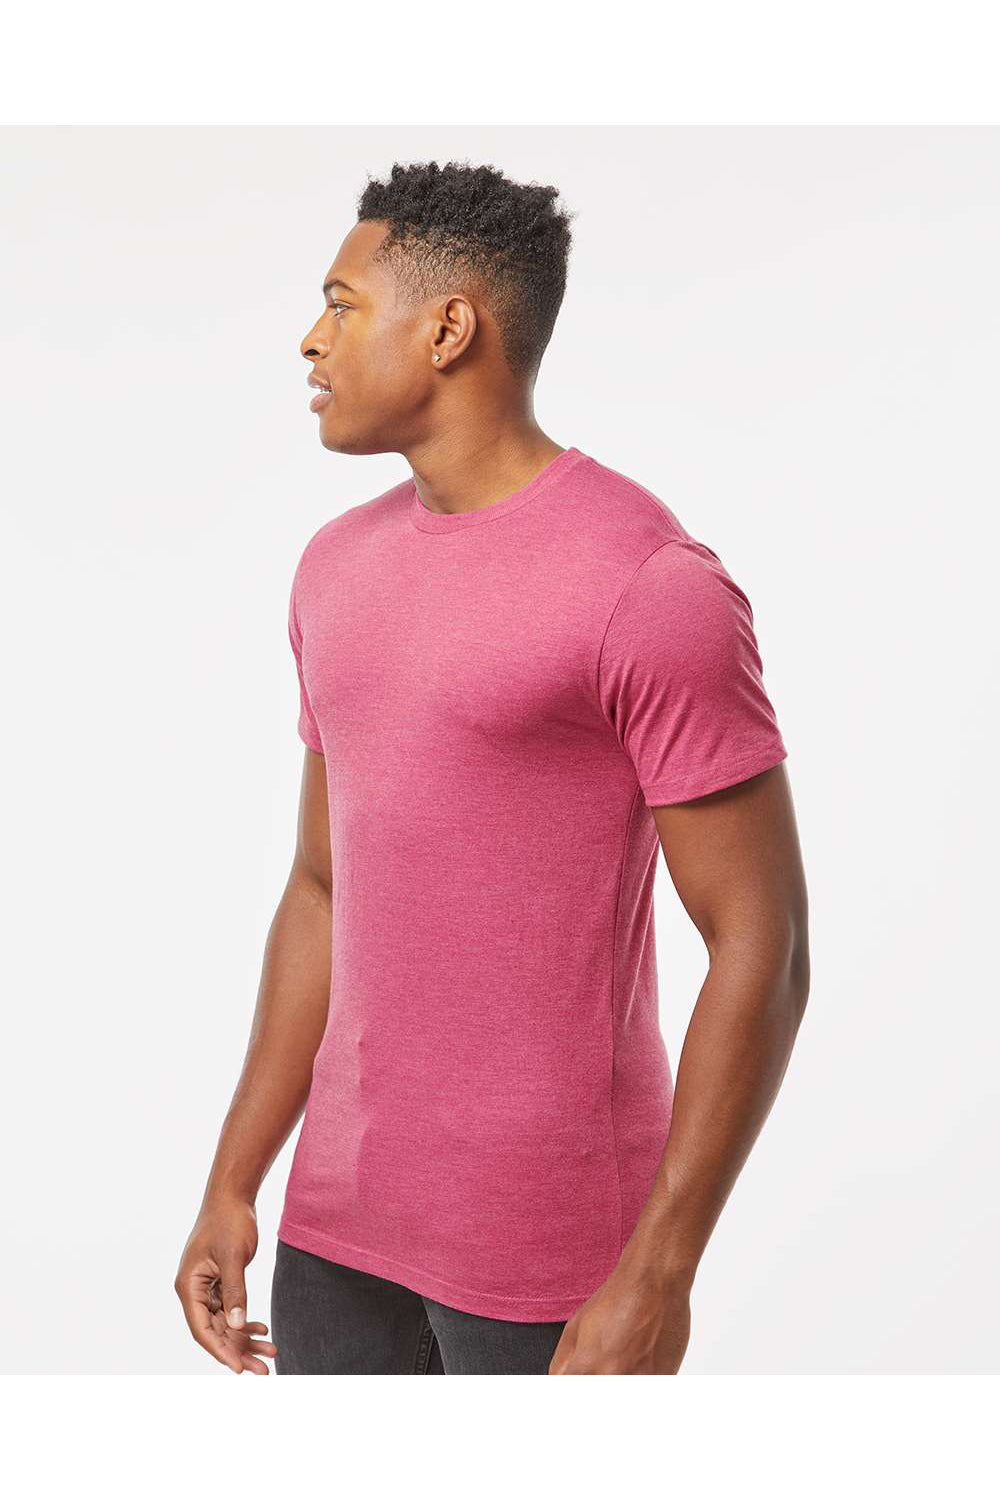 Tultex 541 Mens Premium Short Sleeve Crewneck T-Shirt Heather Cactus Flower Pink Model Side